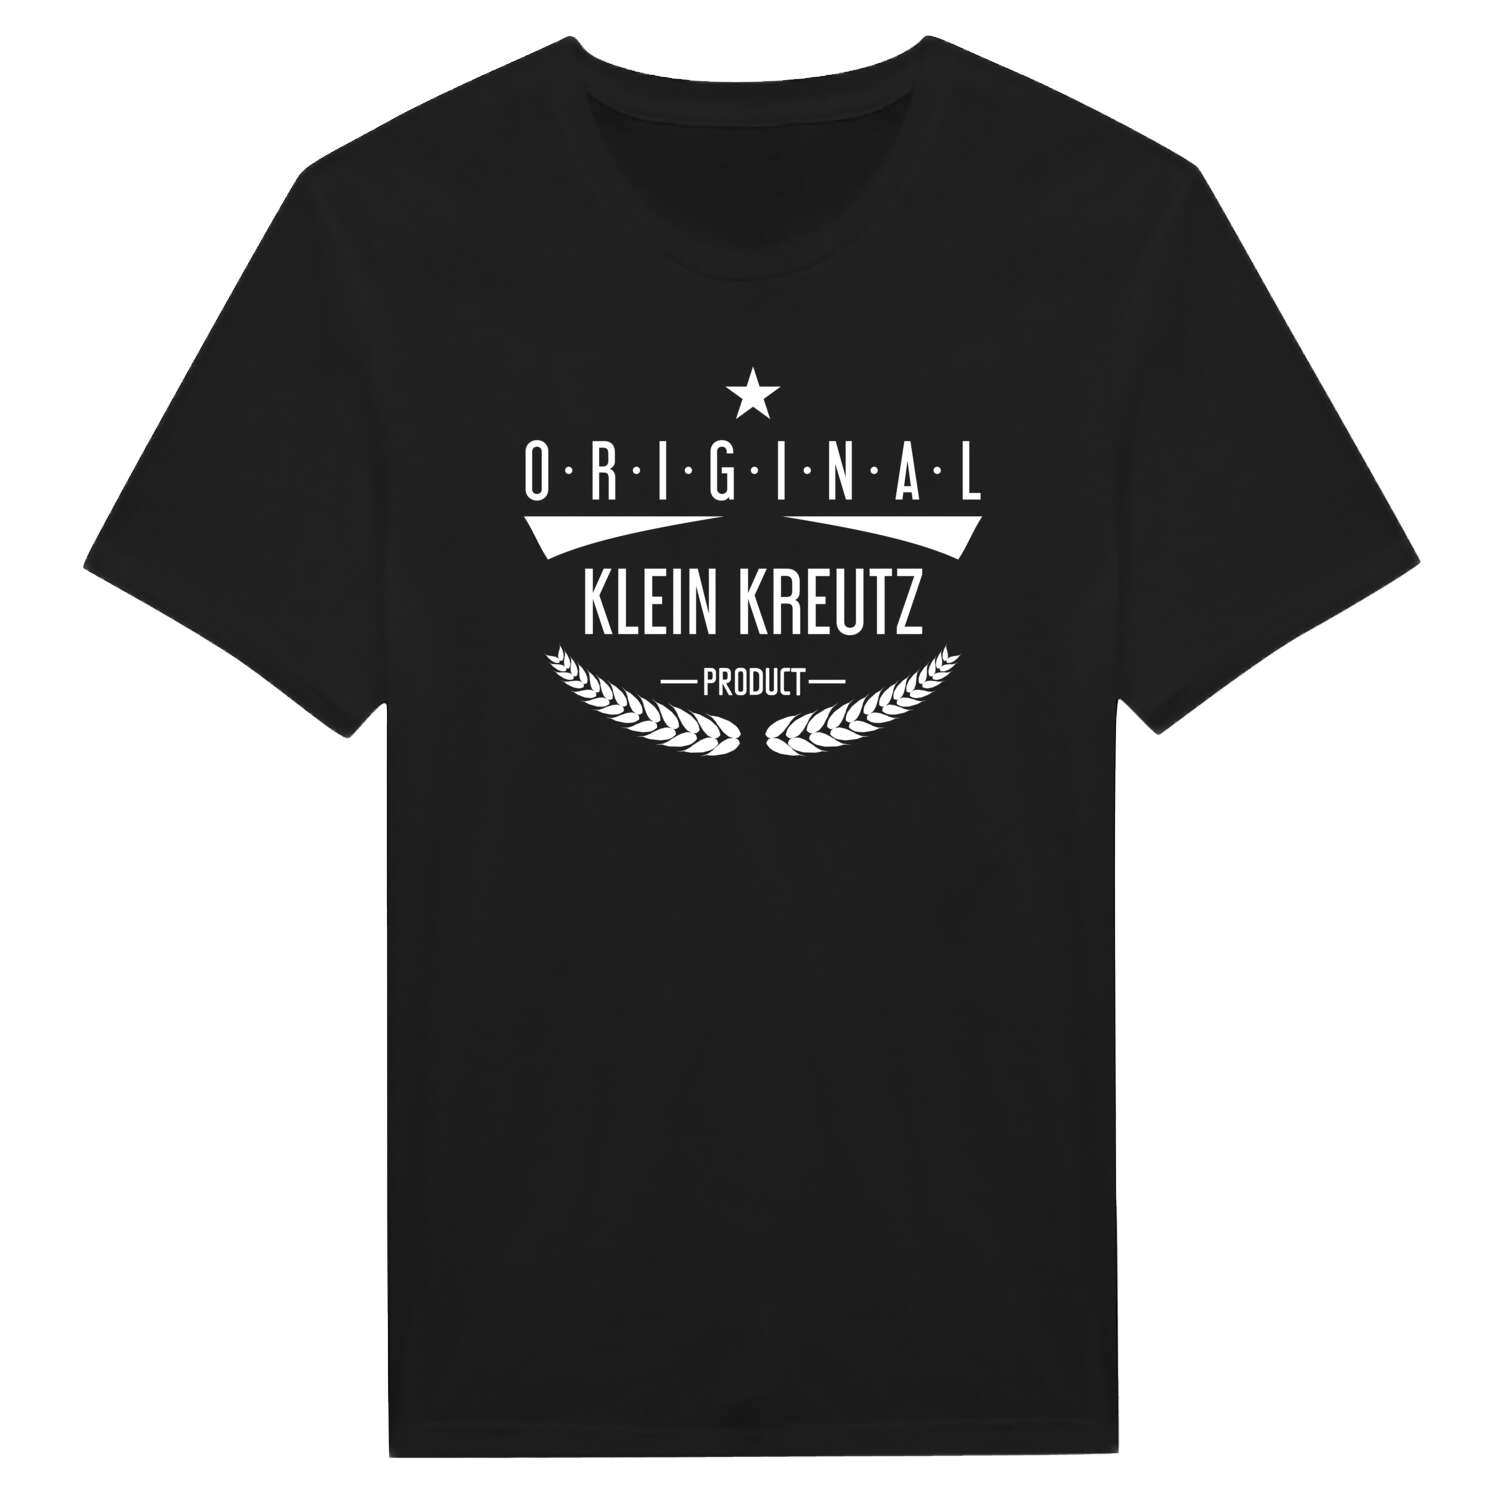 Klein Kreutz T-Shirt »Original Product«